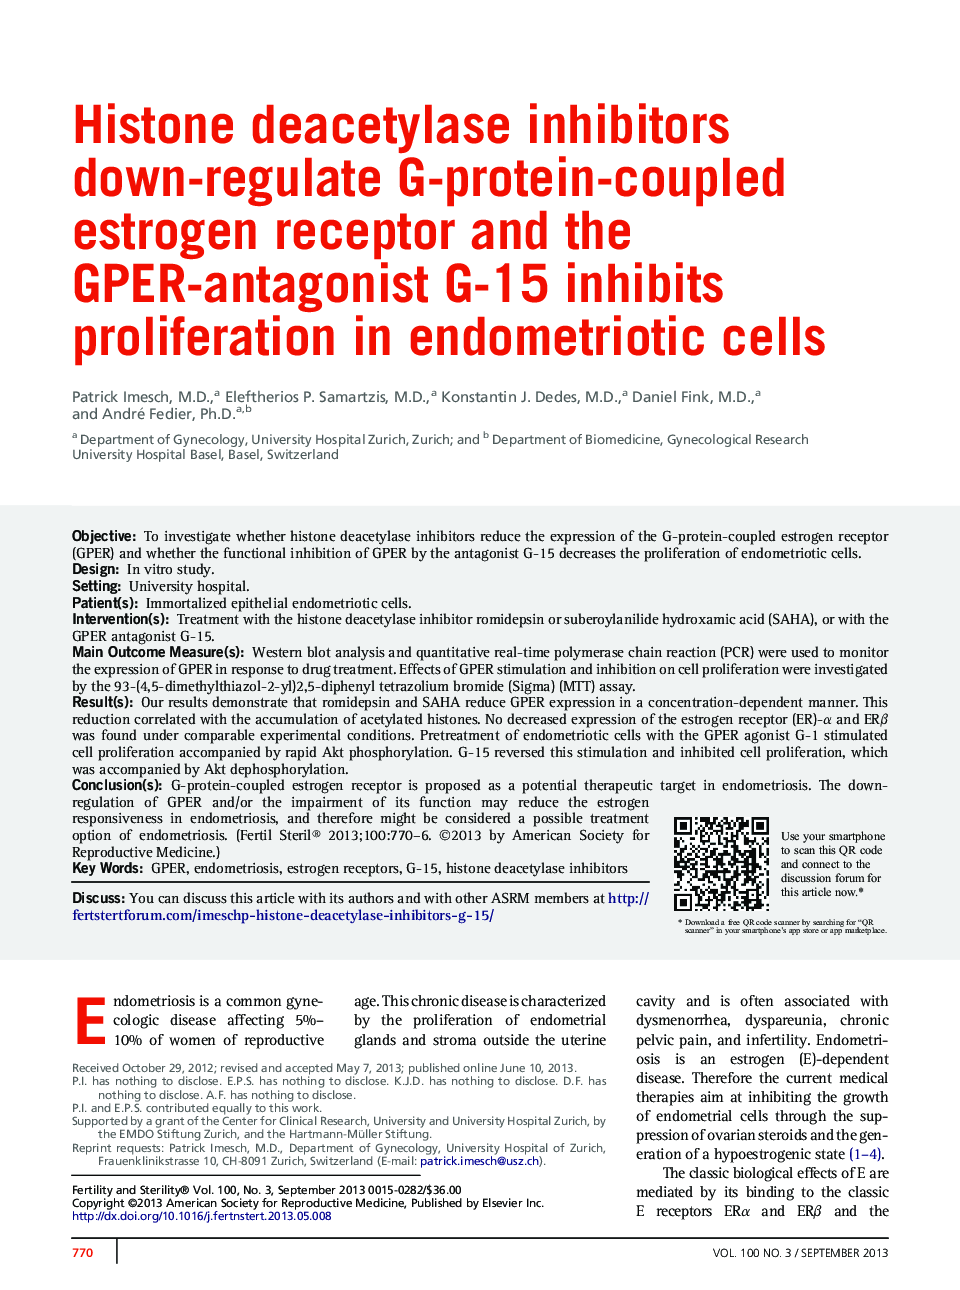 Histone deacetylase inhibitors down-regulate G-protein-coupled estrogen receptor and the GPER-antagonist G-15 inhibits proliferation in endometriotic cells 